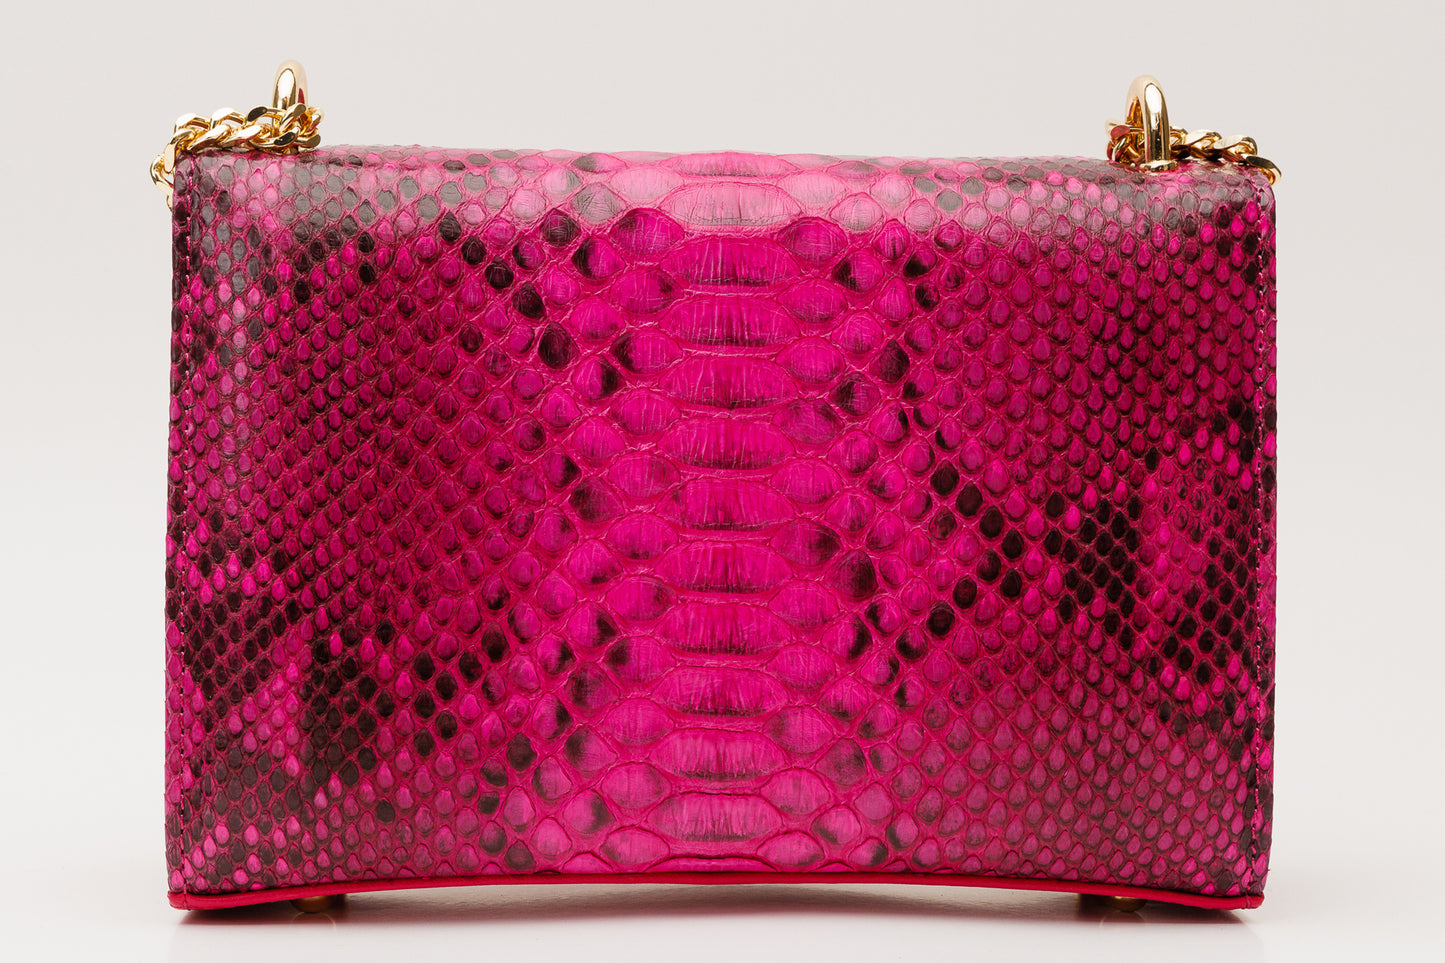 The Toskana Fuchsia Pythn Leather Handbag